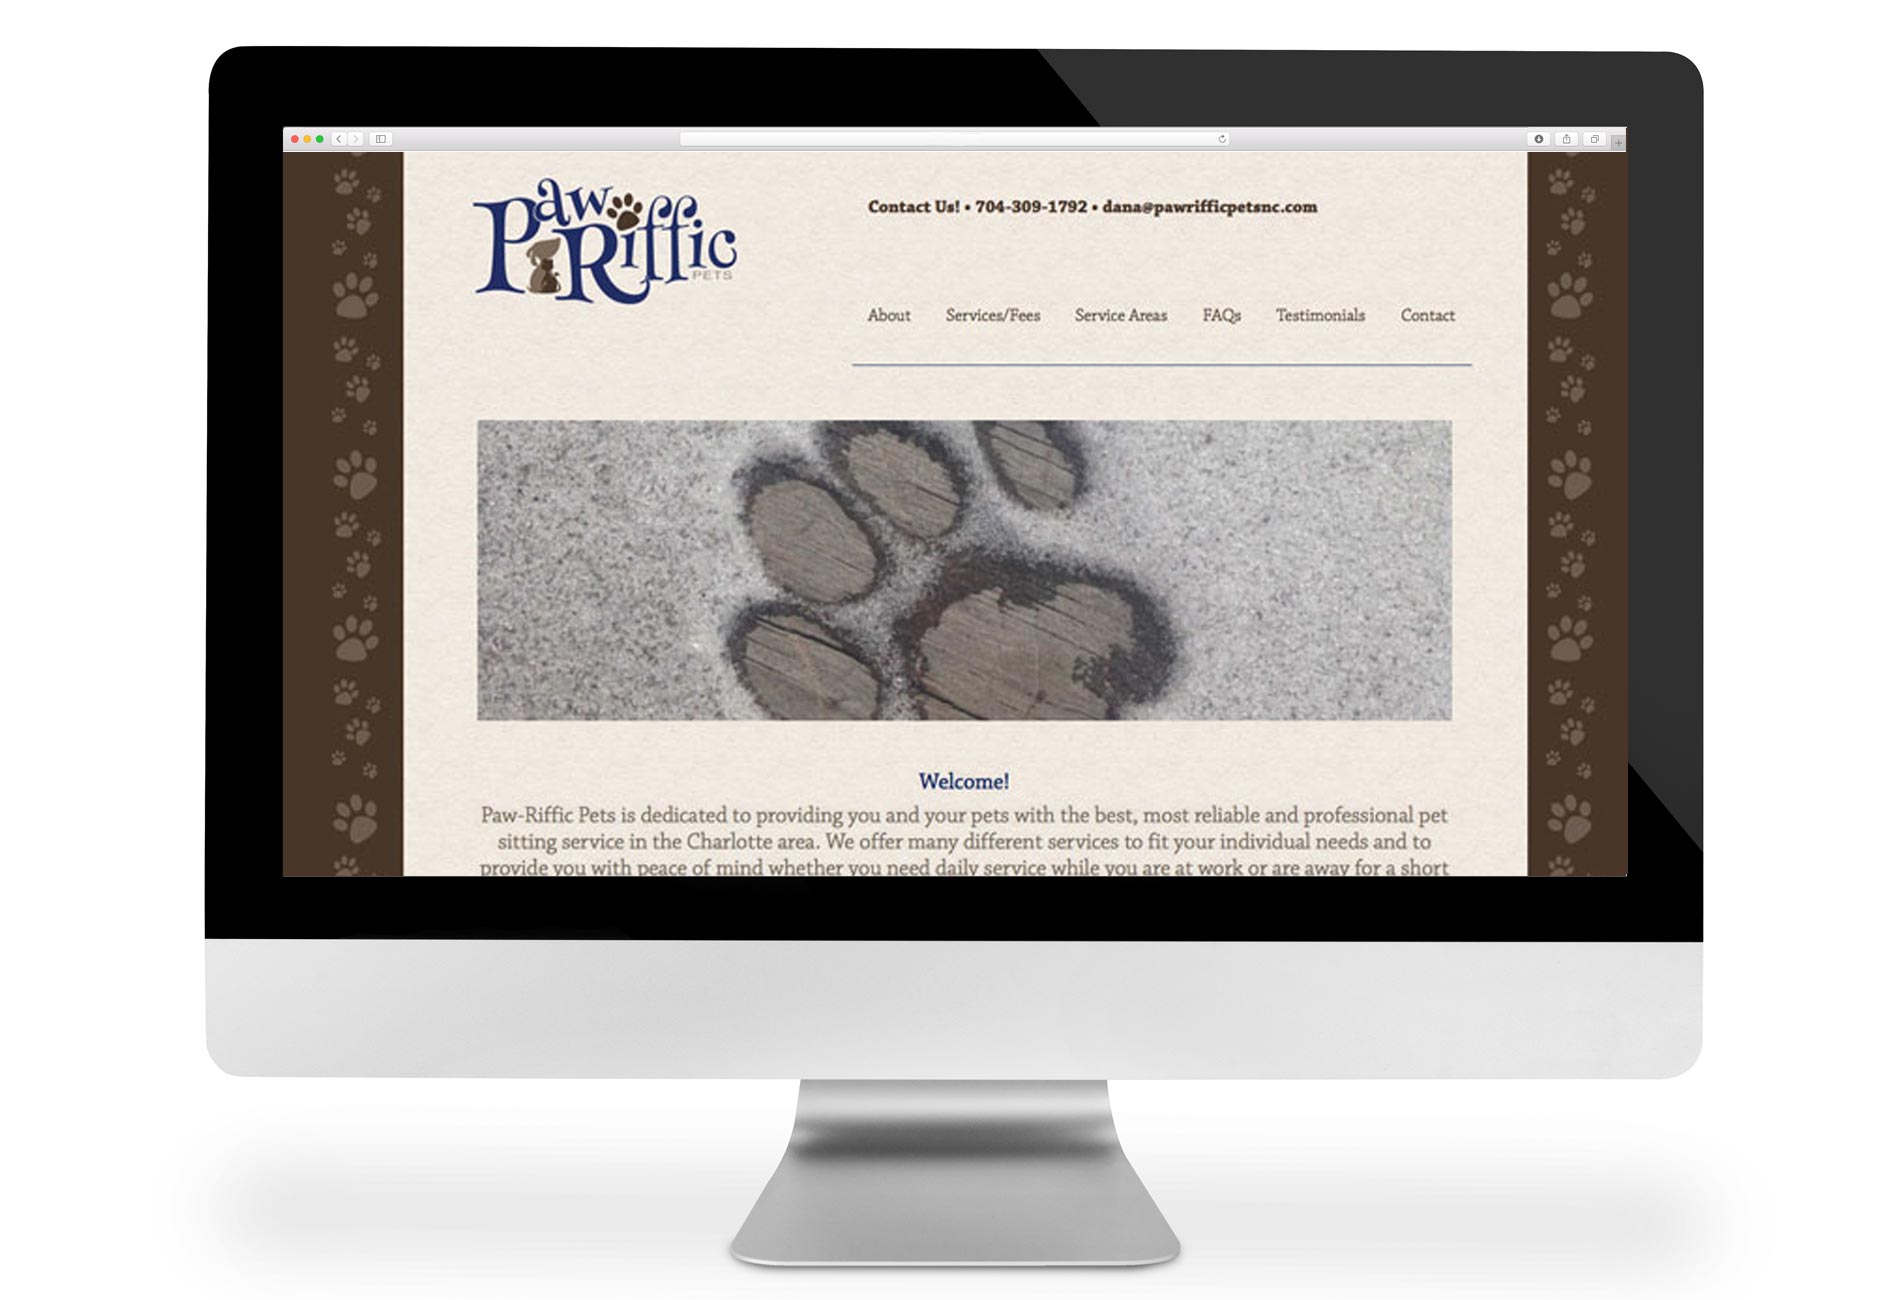 Paw-Riffic Pets website